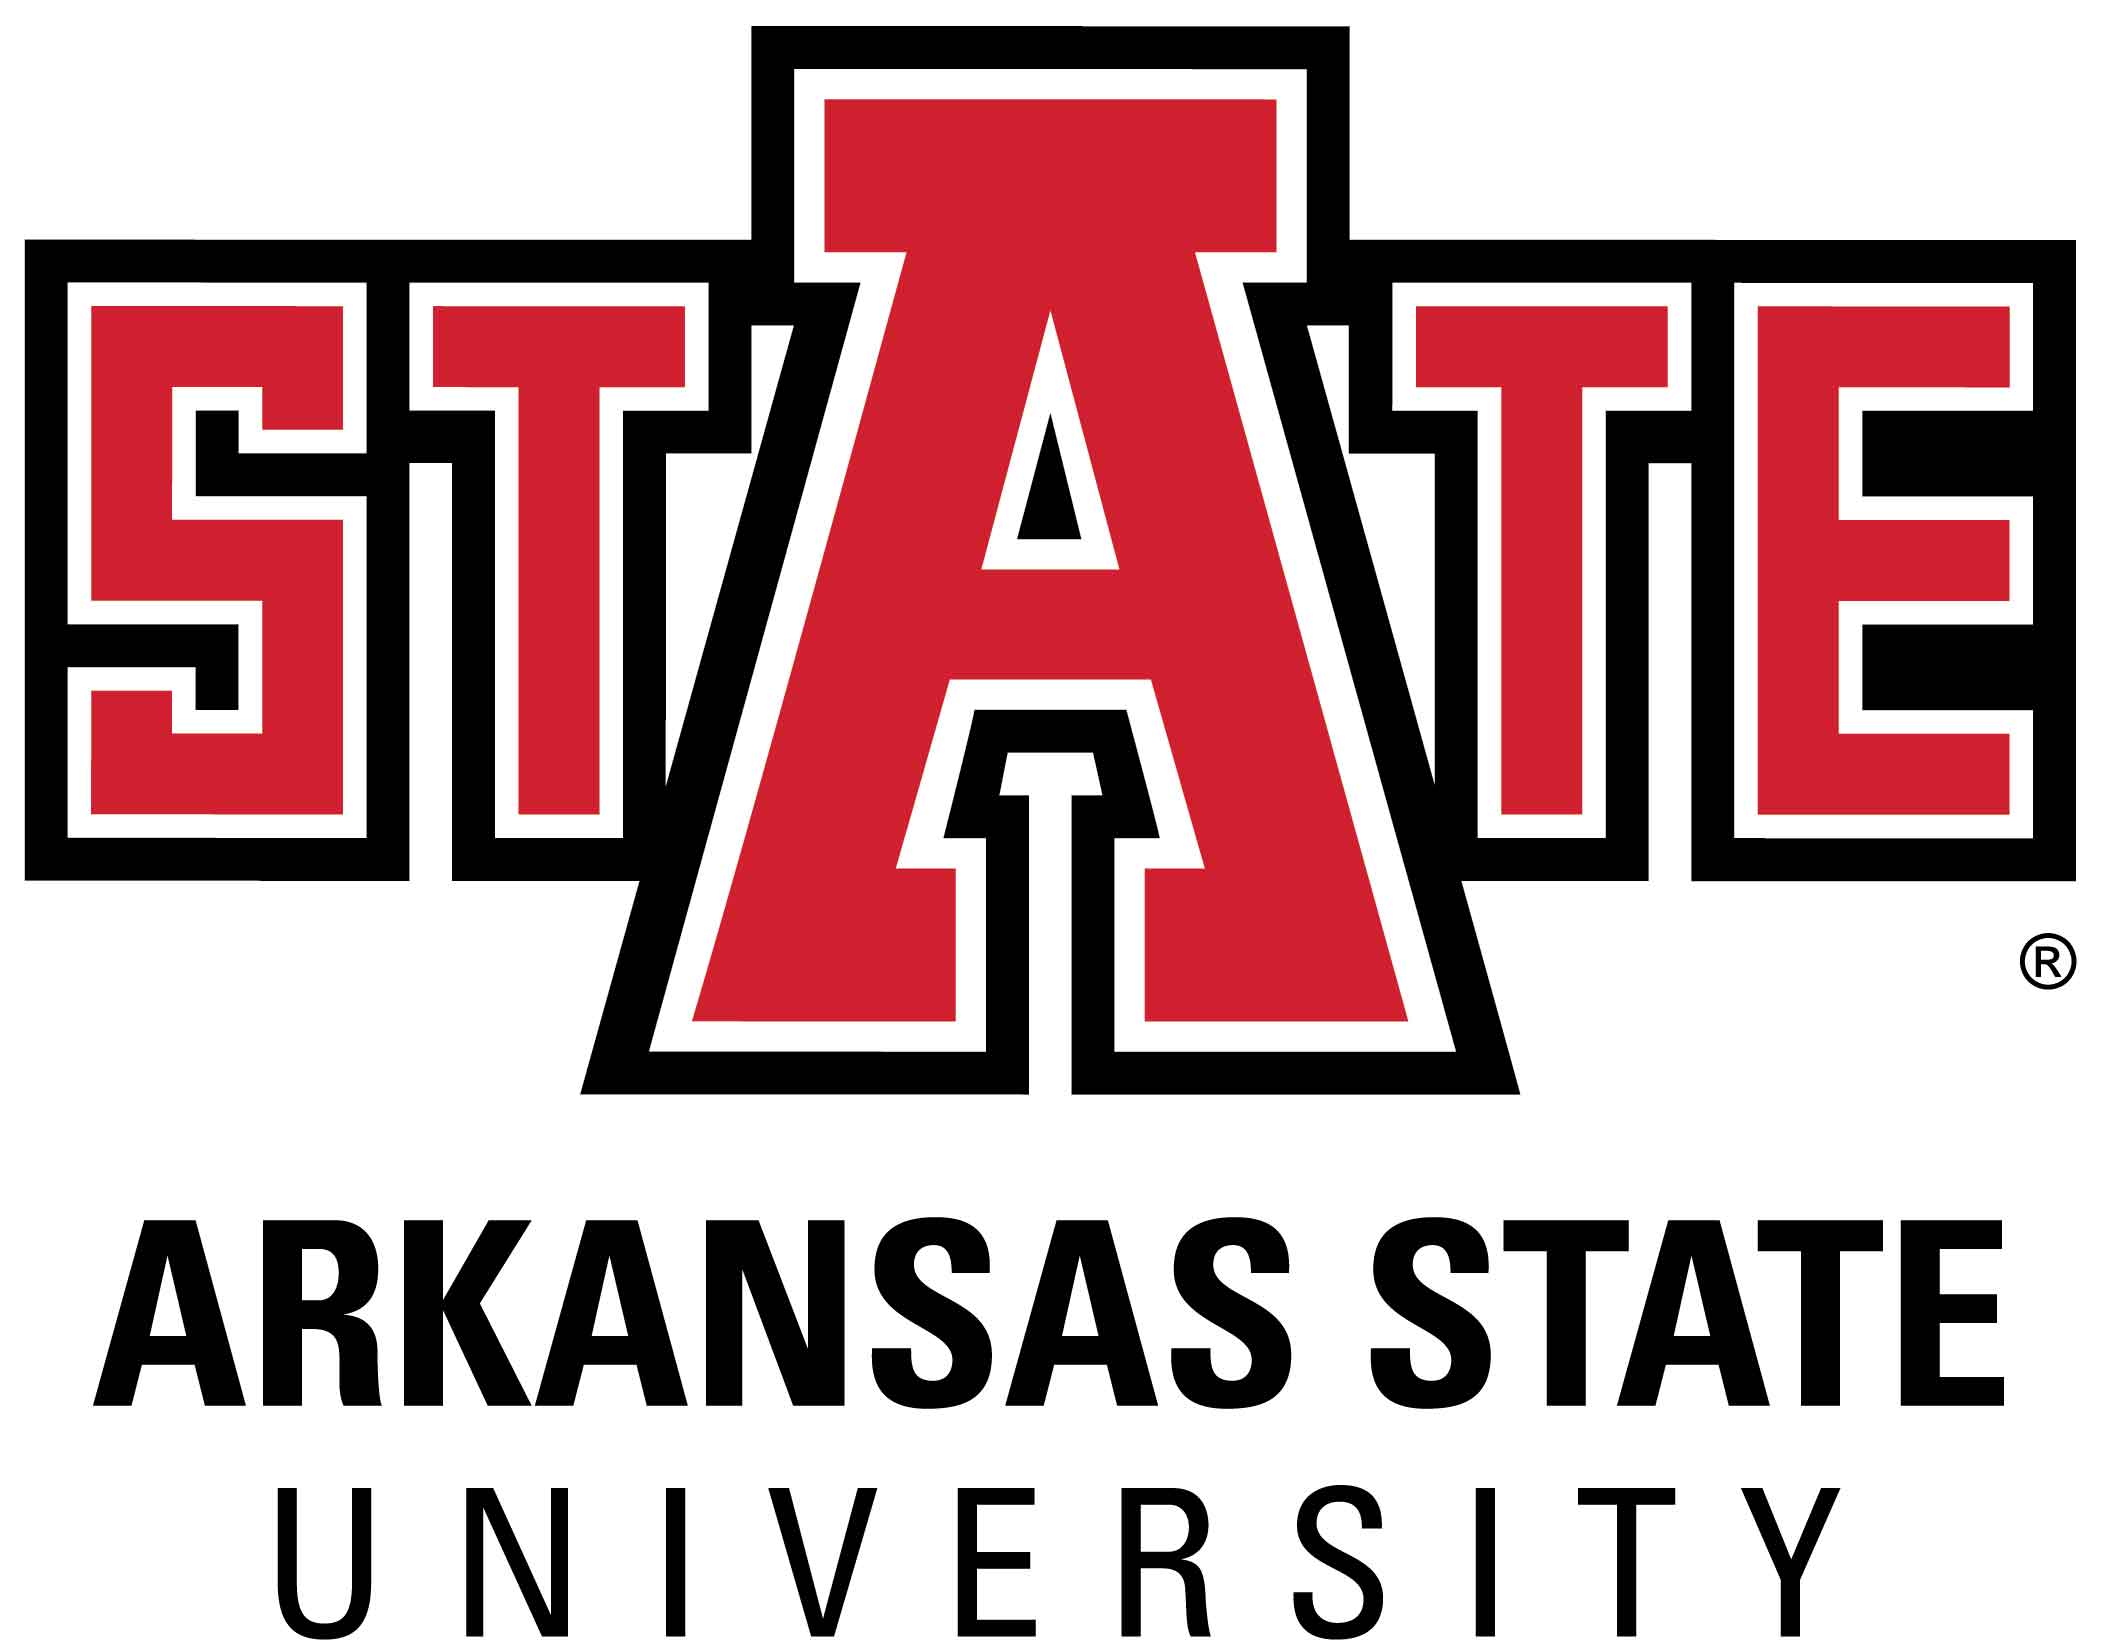 Arkansas State University logo, red and white text